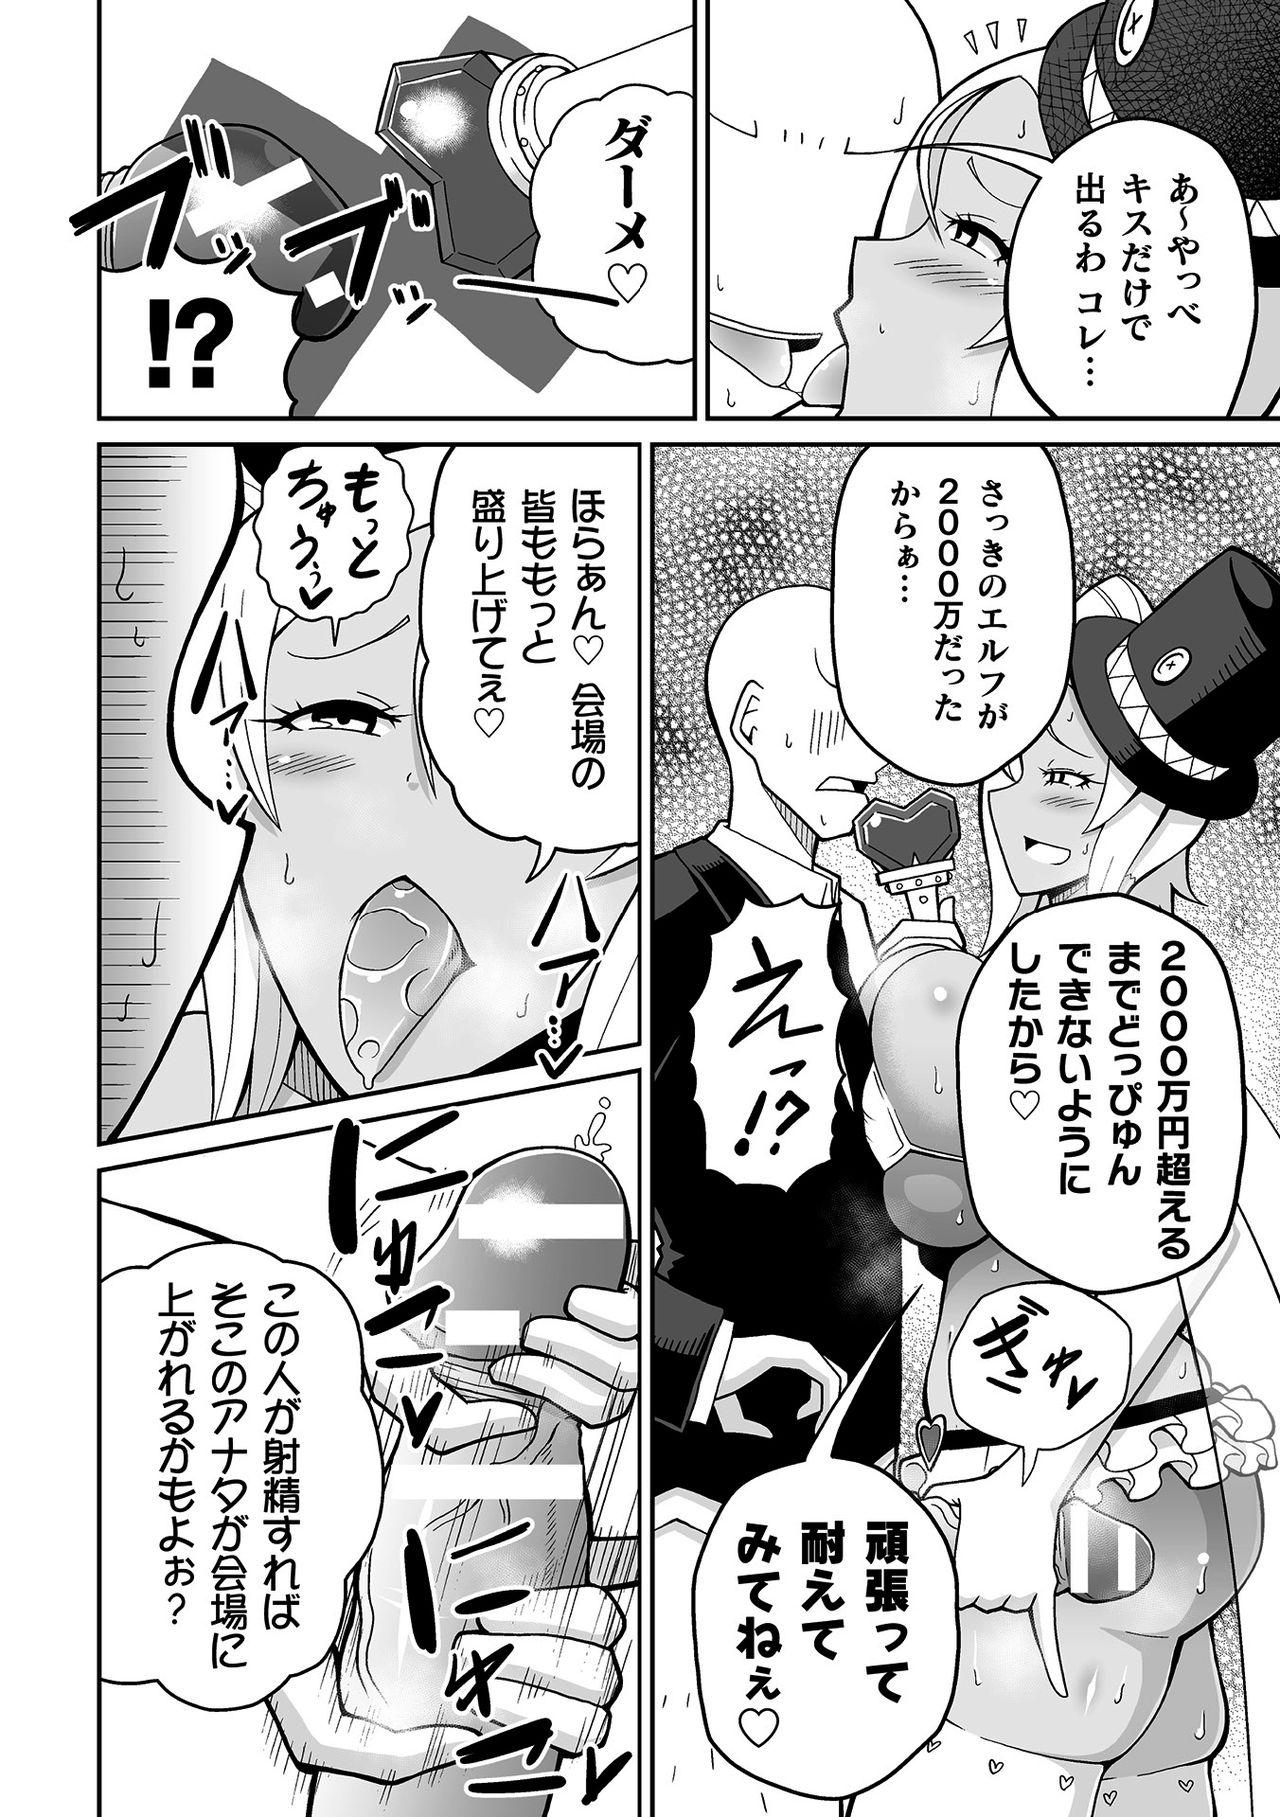 2D Comic Magazine Mahou Shoujo Seidorei Auction e Youkoso! Vol. 1 49